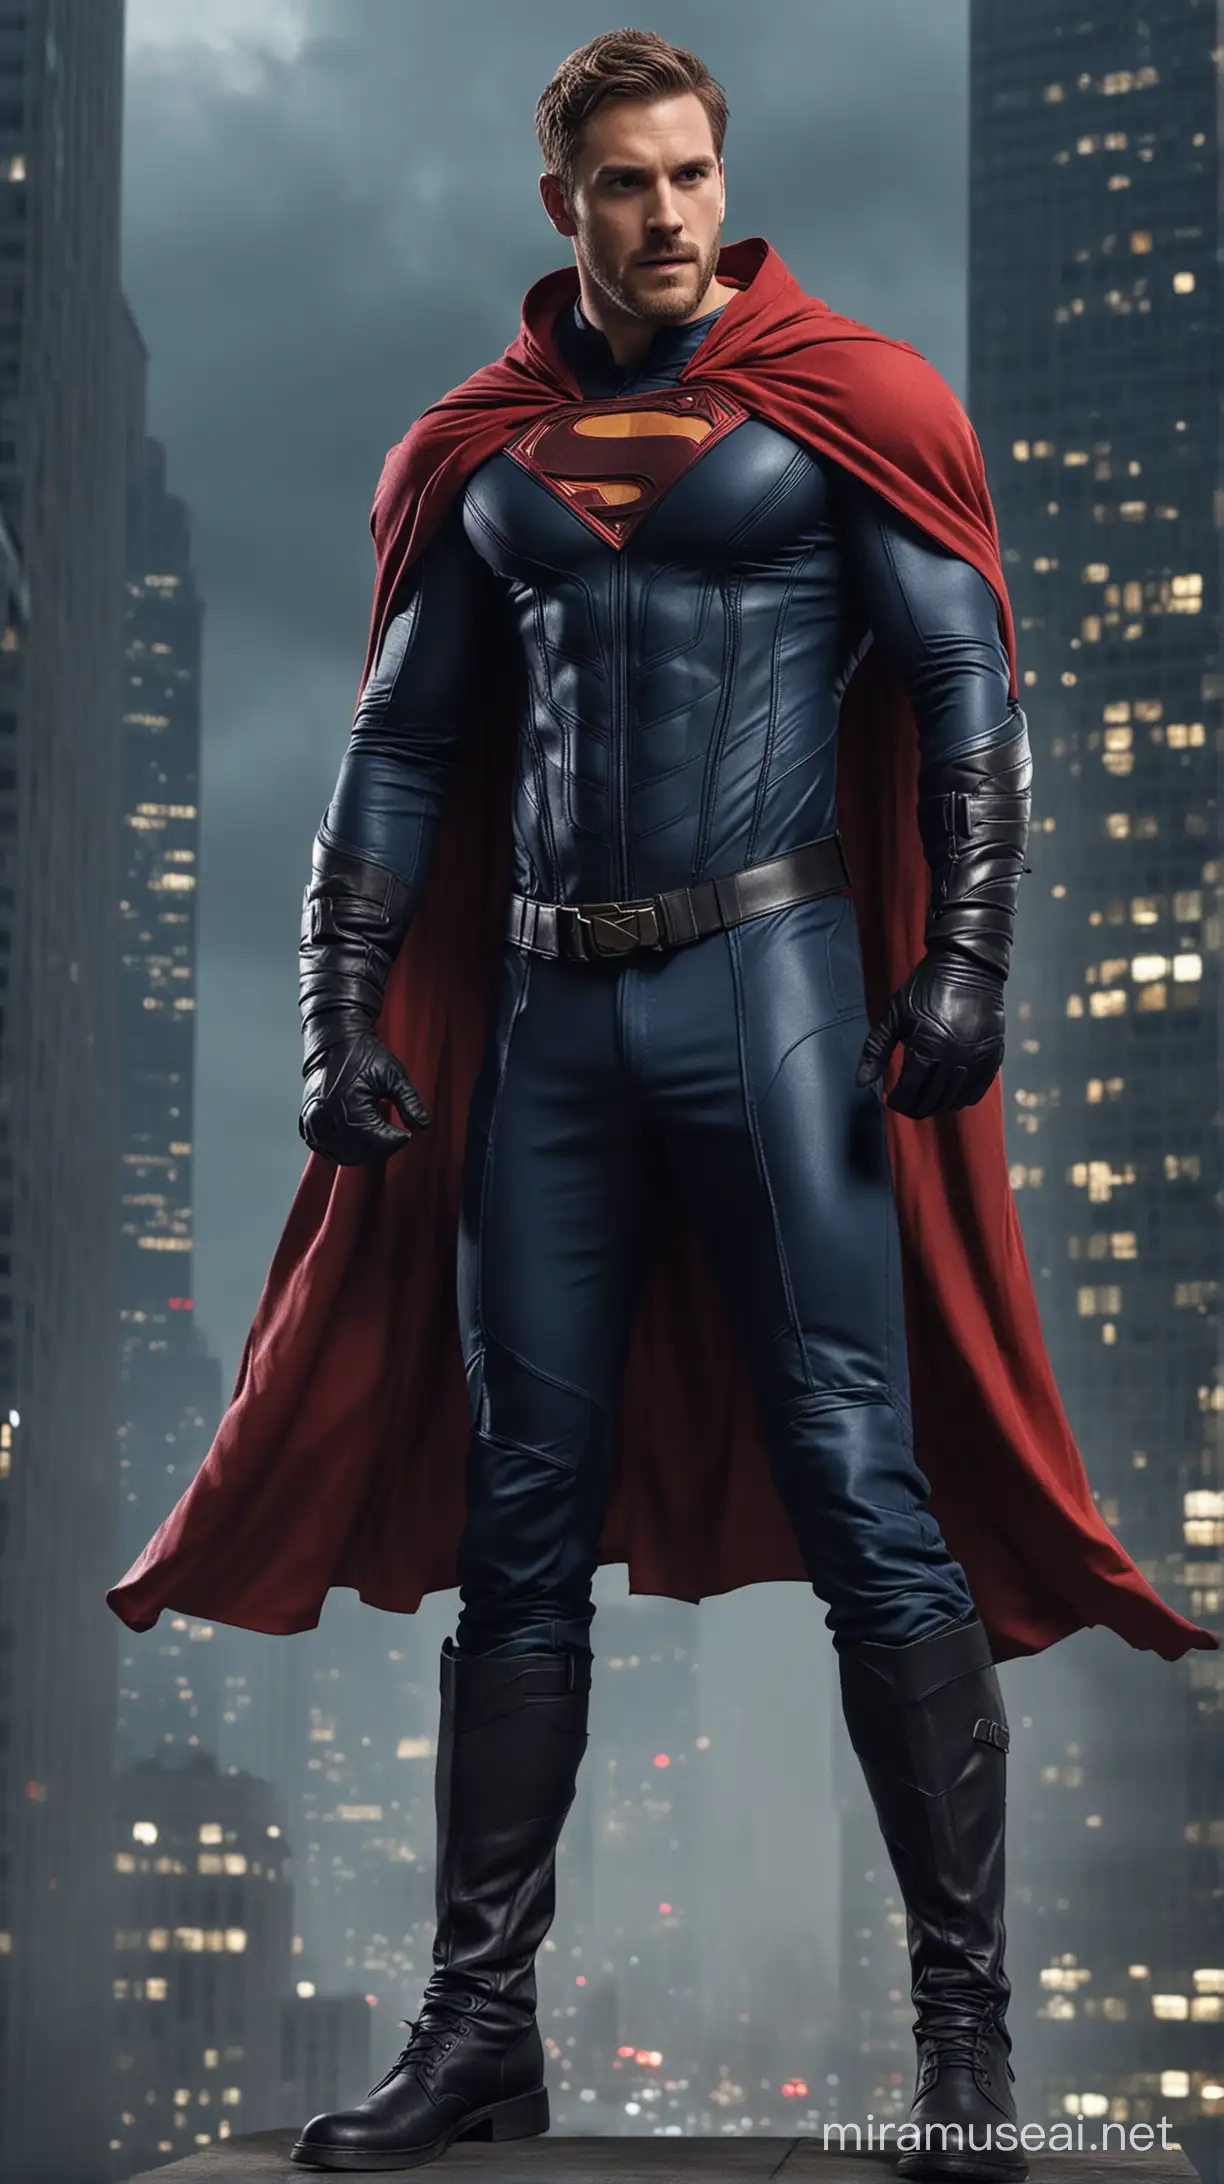 Muscular Superhero Chris Wood Stands Tall Amidst Modern Skyscraper at Night